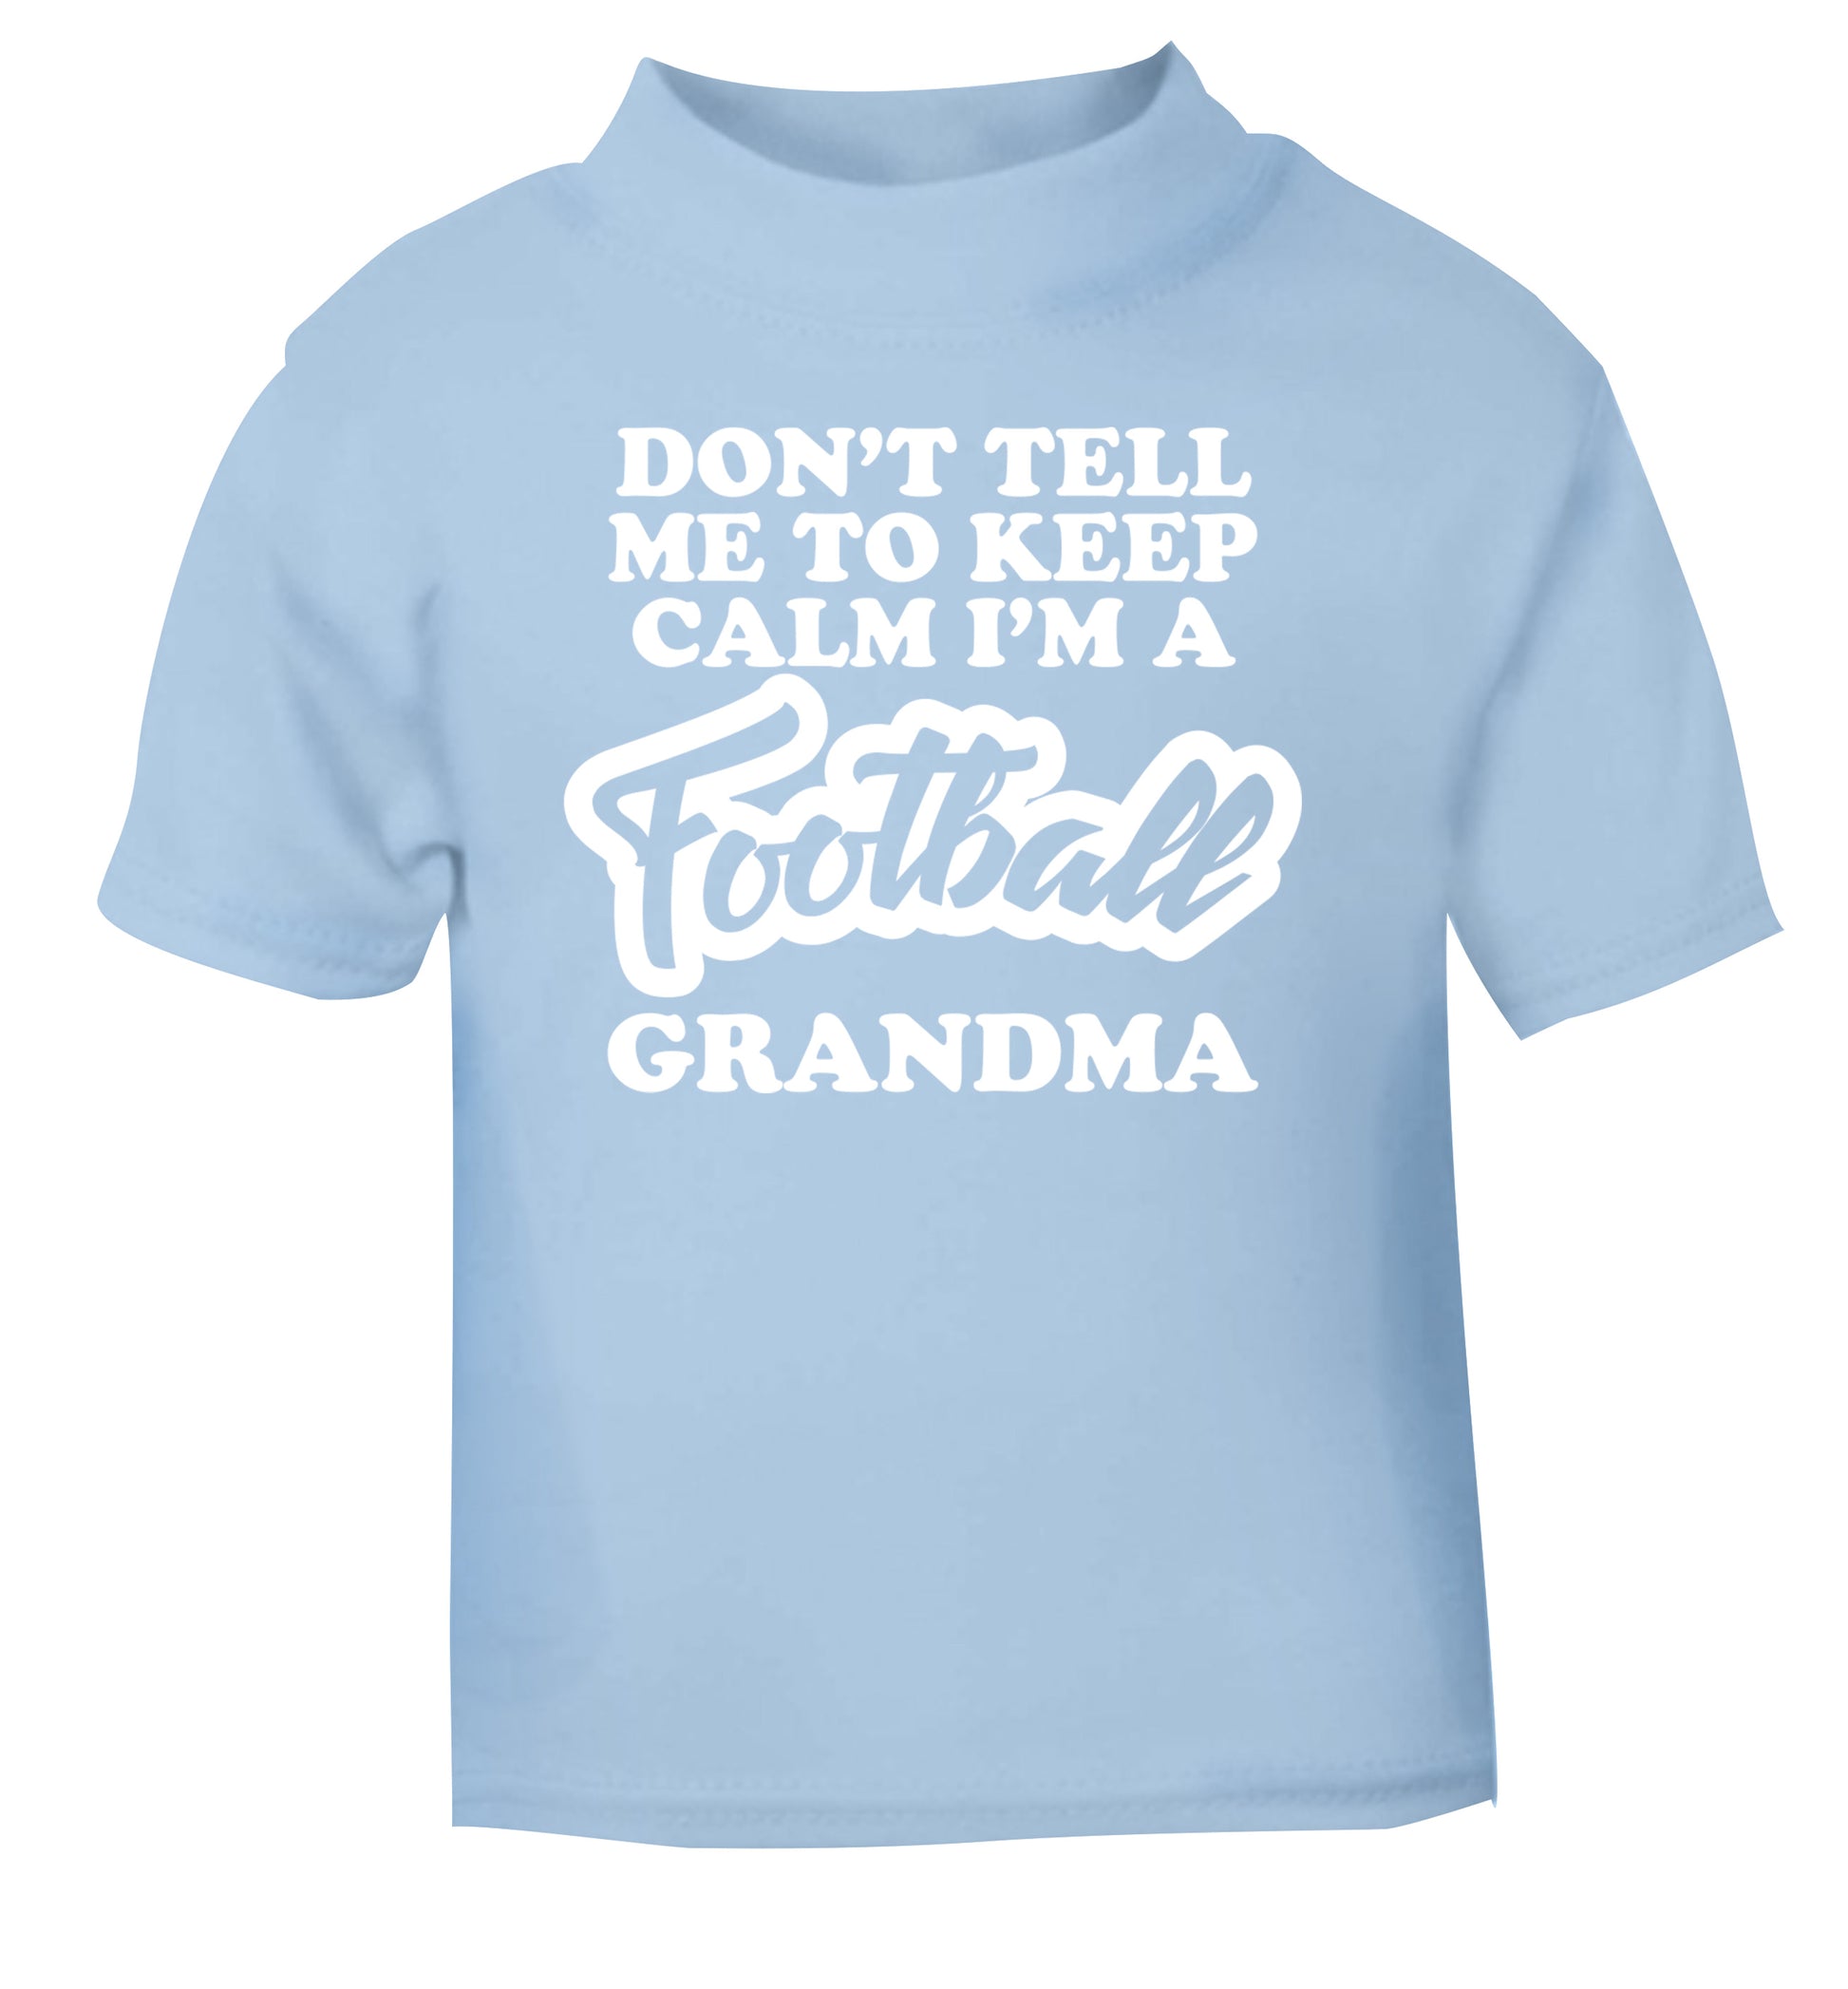 Don't tell me to keep calm I'm a football grandma light blue Baby Toddler Tshirt 2 Years